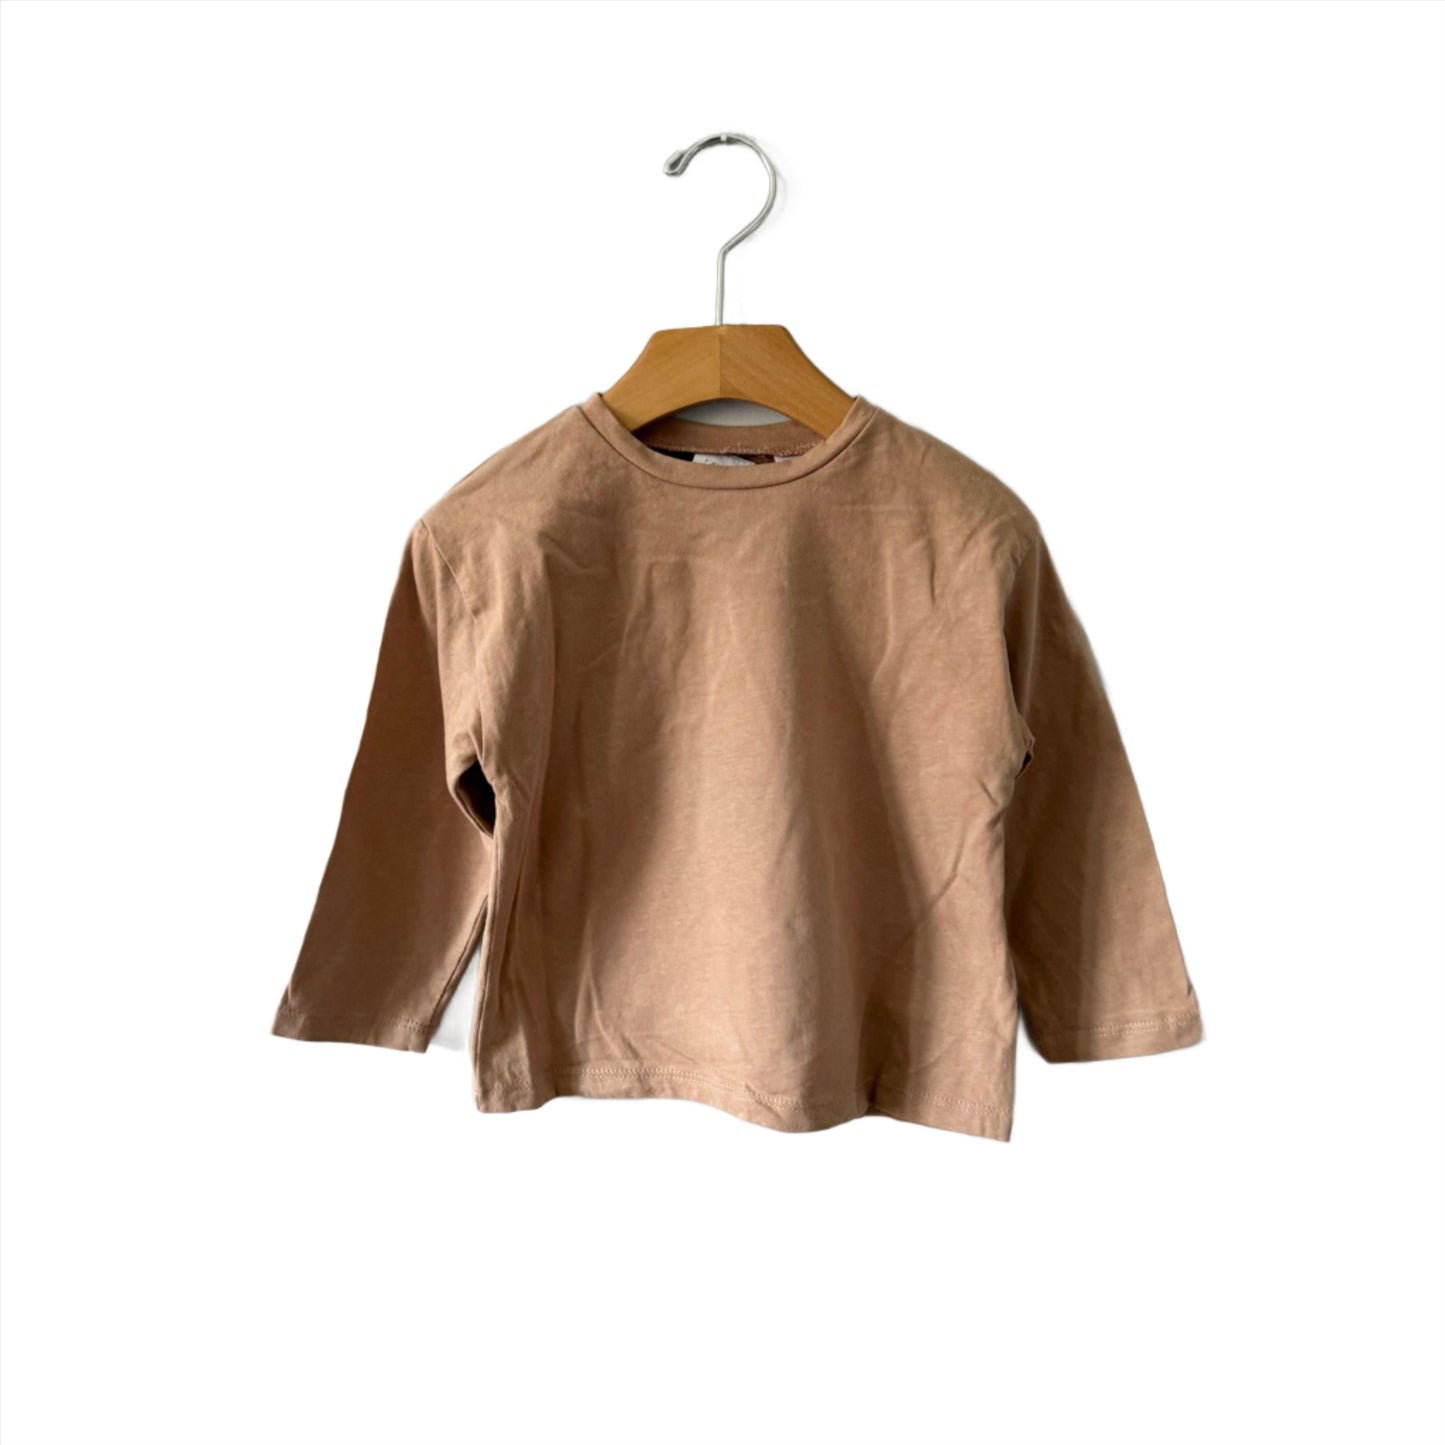 Zara / Brown long sleeve T-shirt / 12-18M